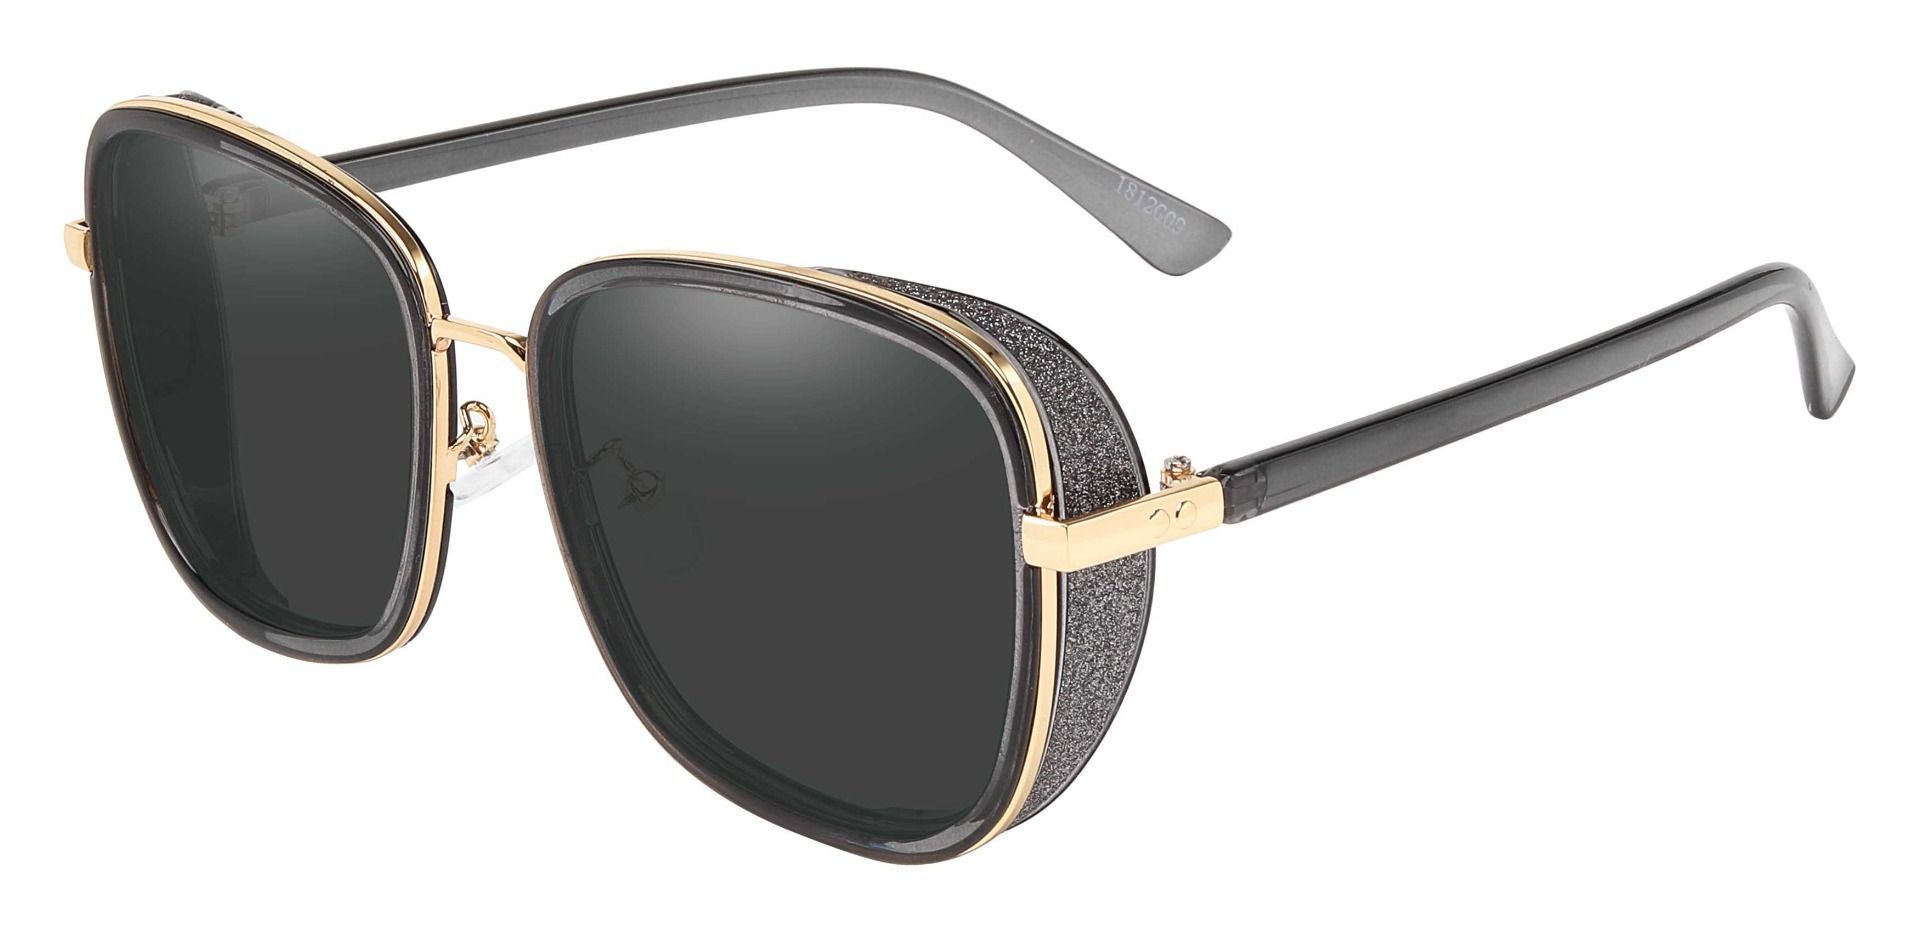 Shimmer Square Reading Sunglasses - Gray Frame With Gray Lenses